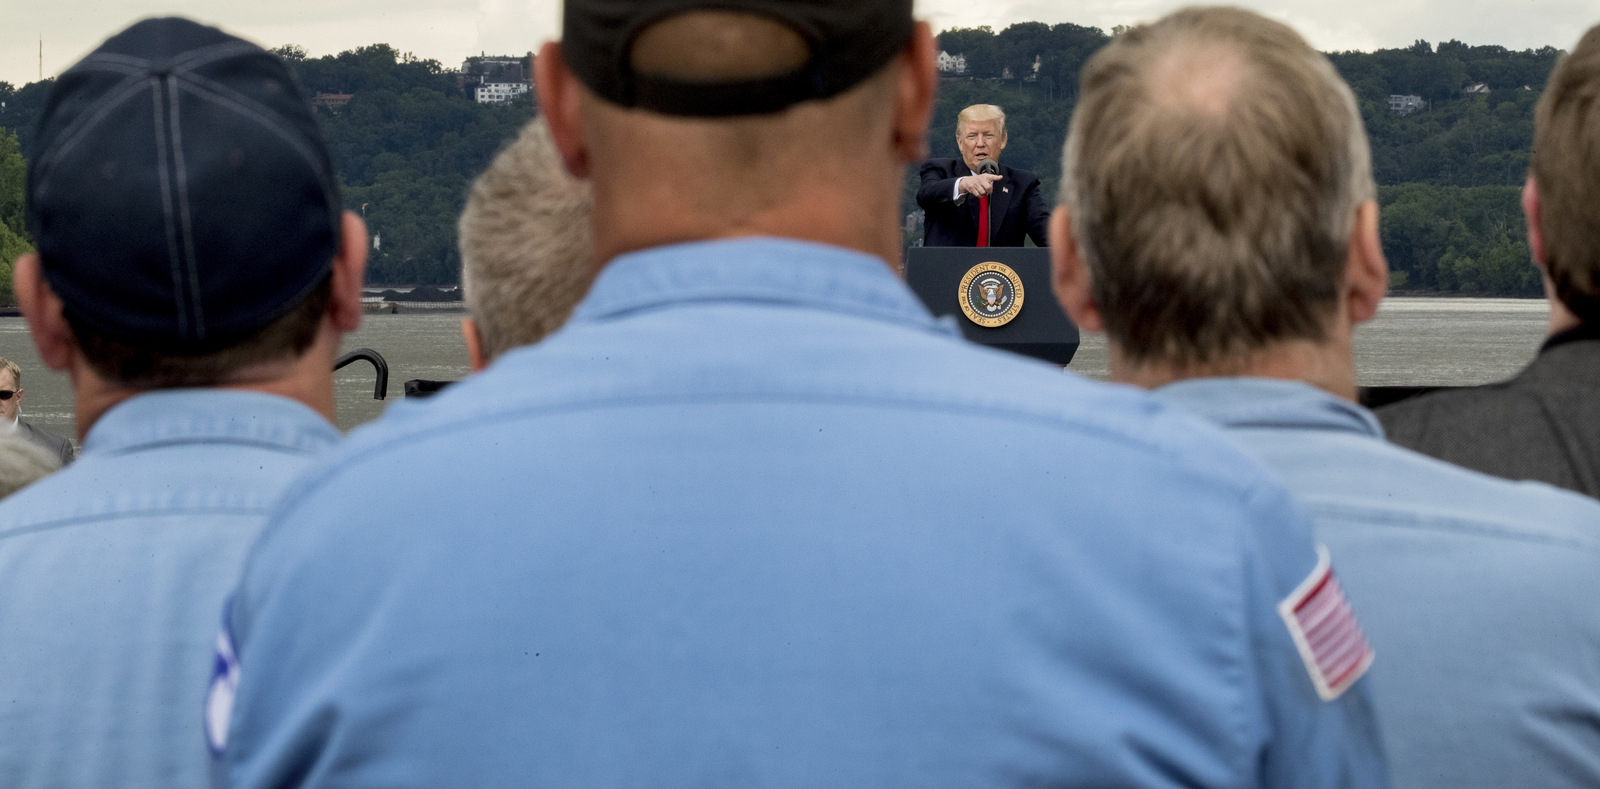 Workers listen as President Donald Trump, top center, speaks about infrastructure at Rivertowne Marina in Cincinnati, Ohio, June 7, 2017. (AP/Andrew Harnik)